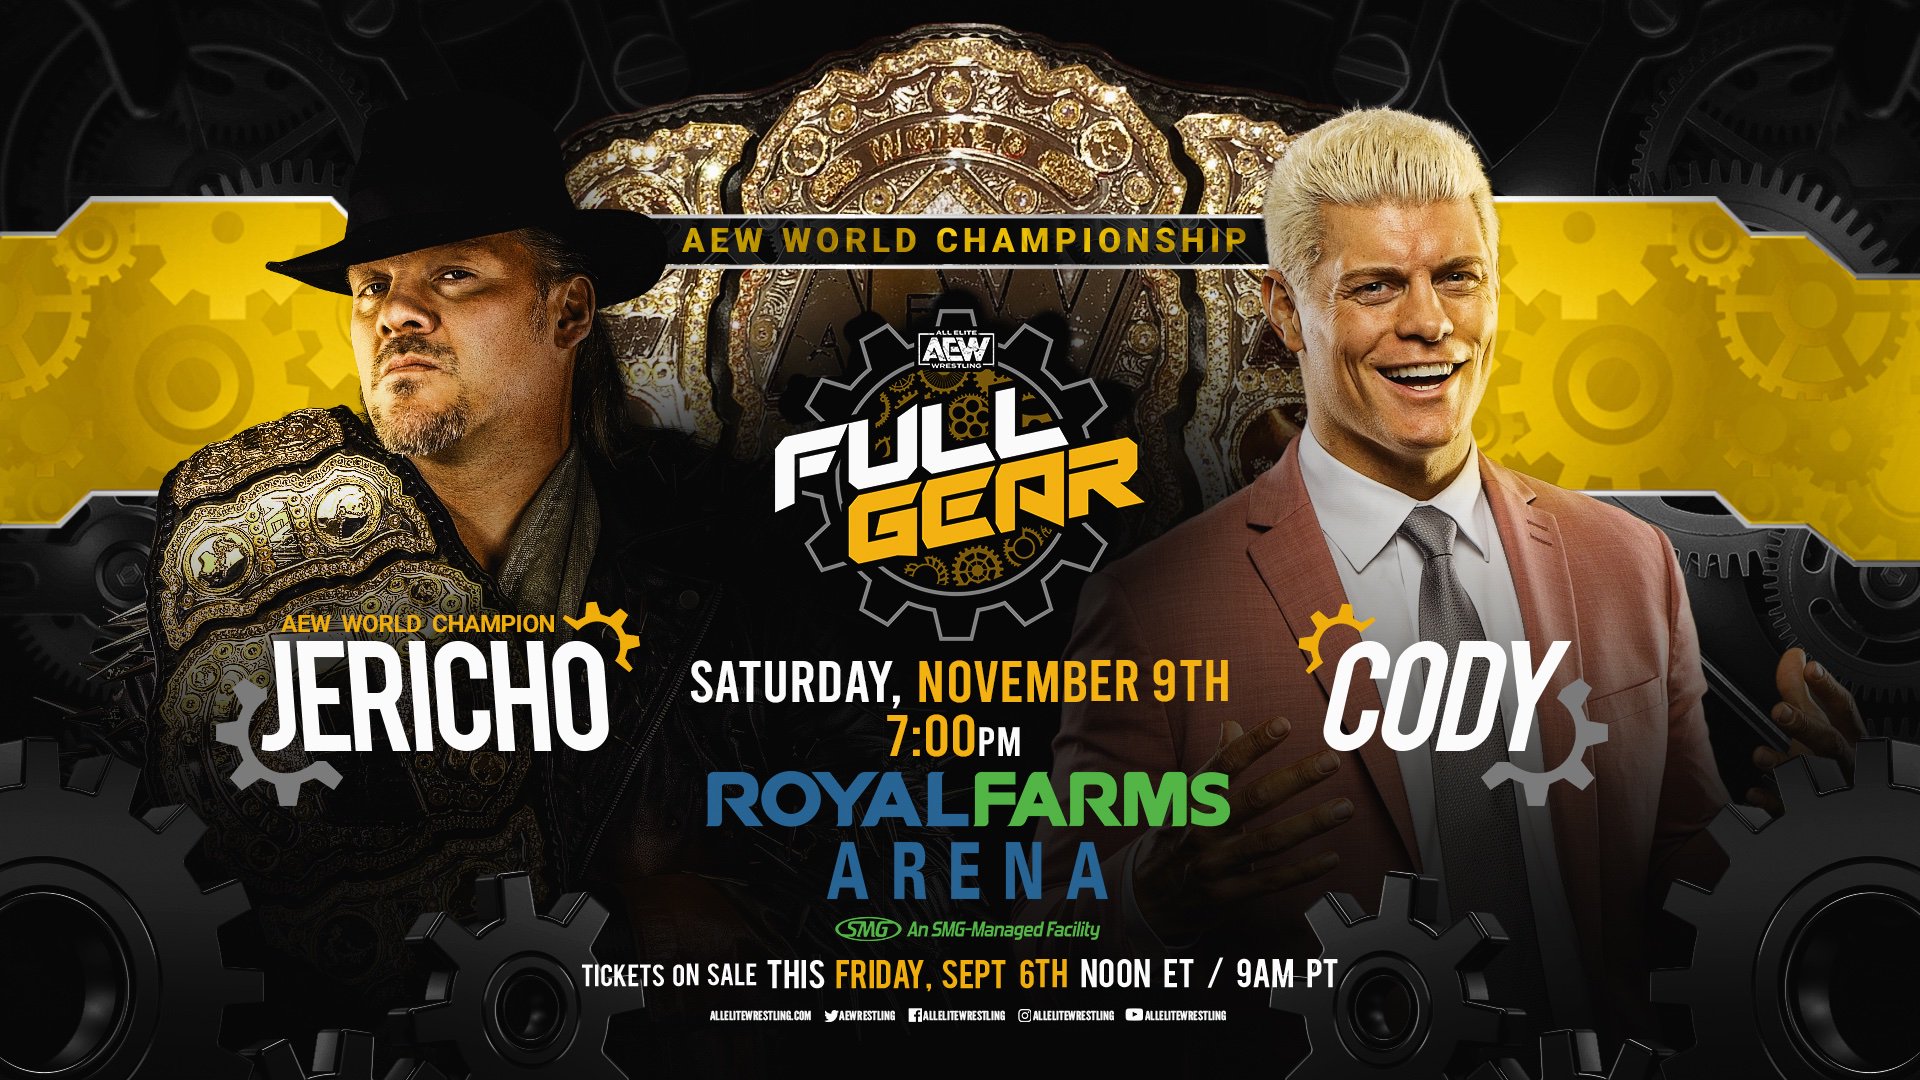 Chris Jericho vs. Cody World Championship match announced for AEW Full Gear